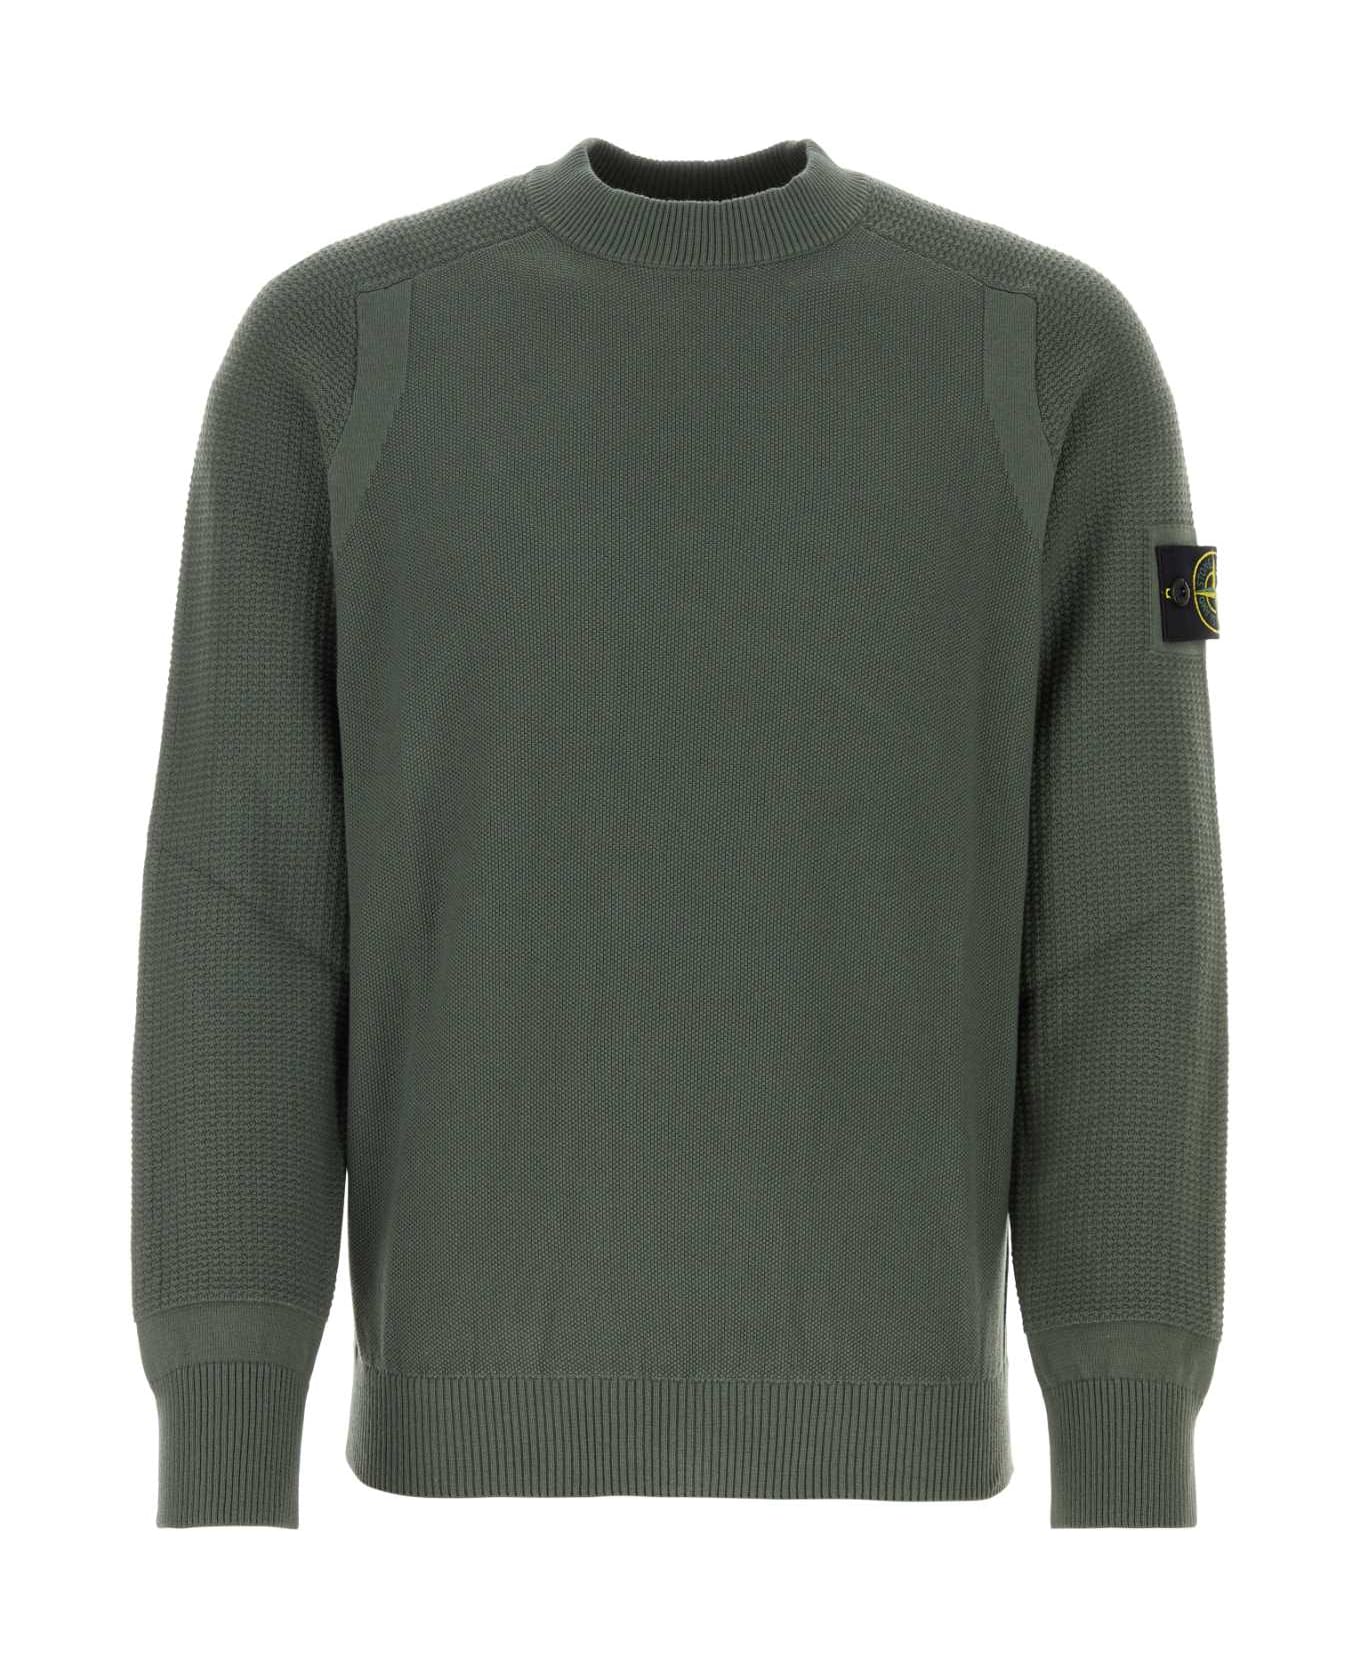 Stone Island Sage Green Cotton Sweater - MUSCHIO ニットウェア